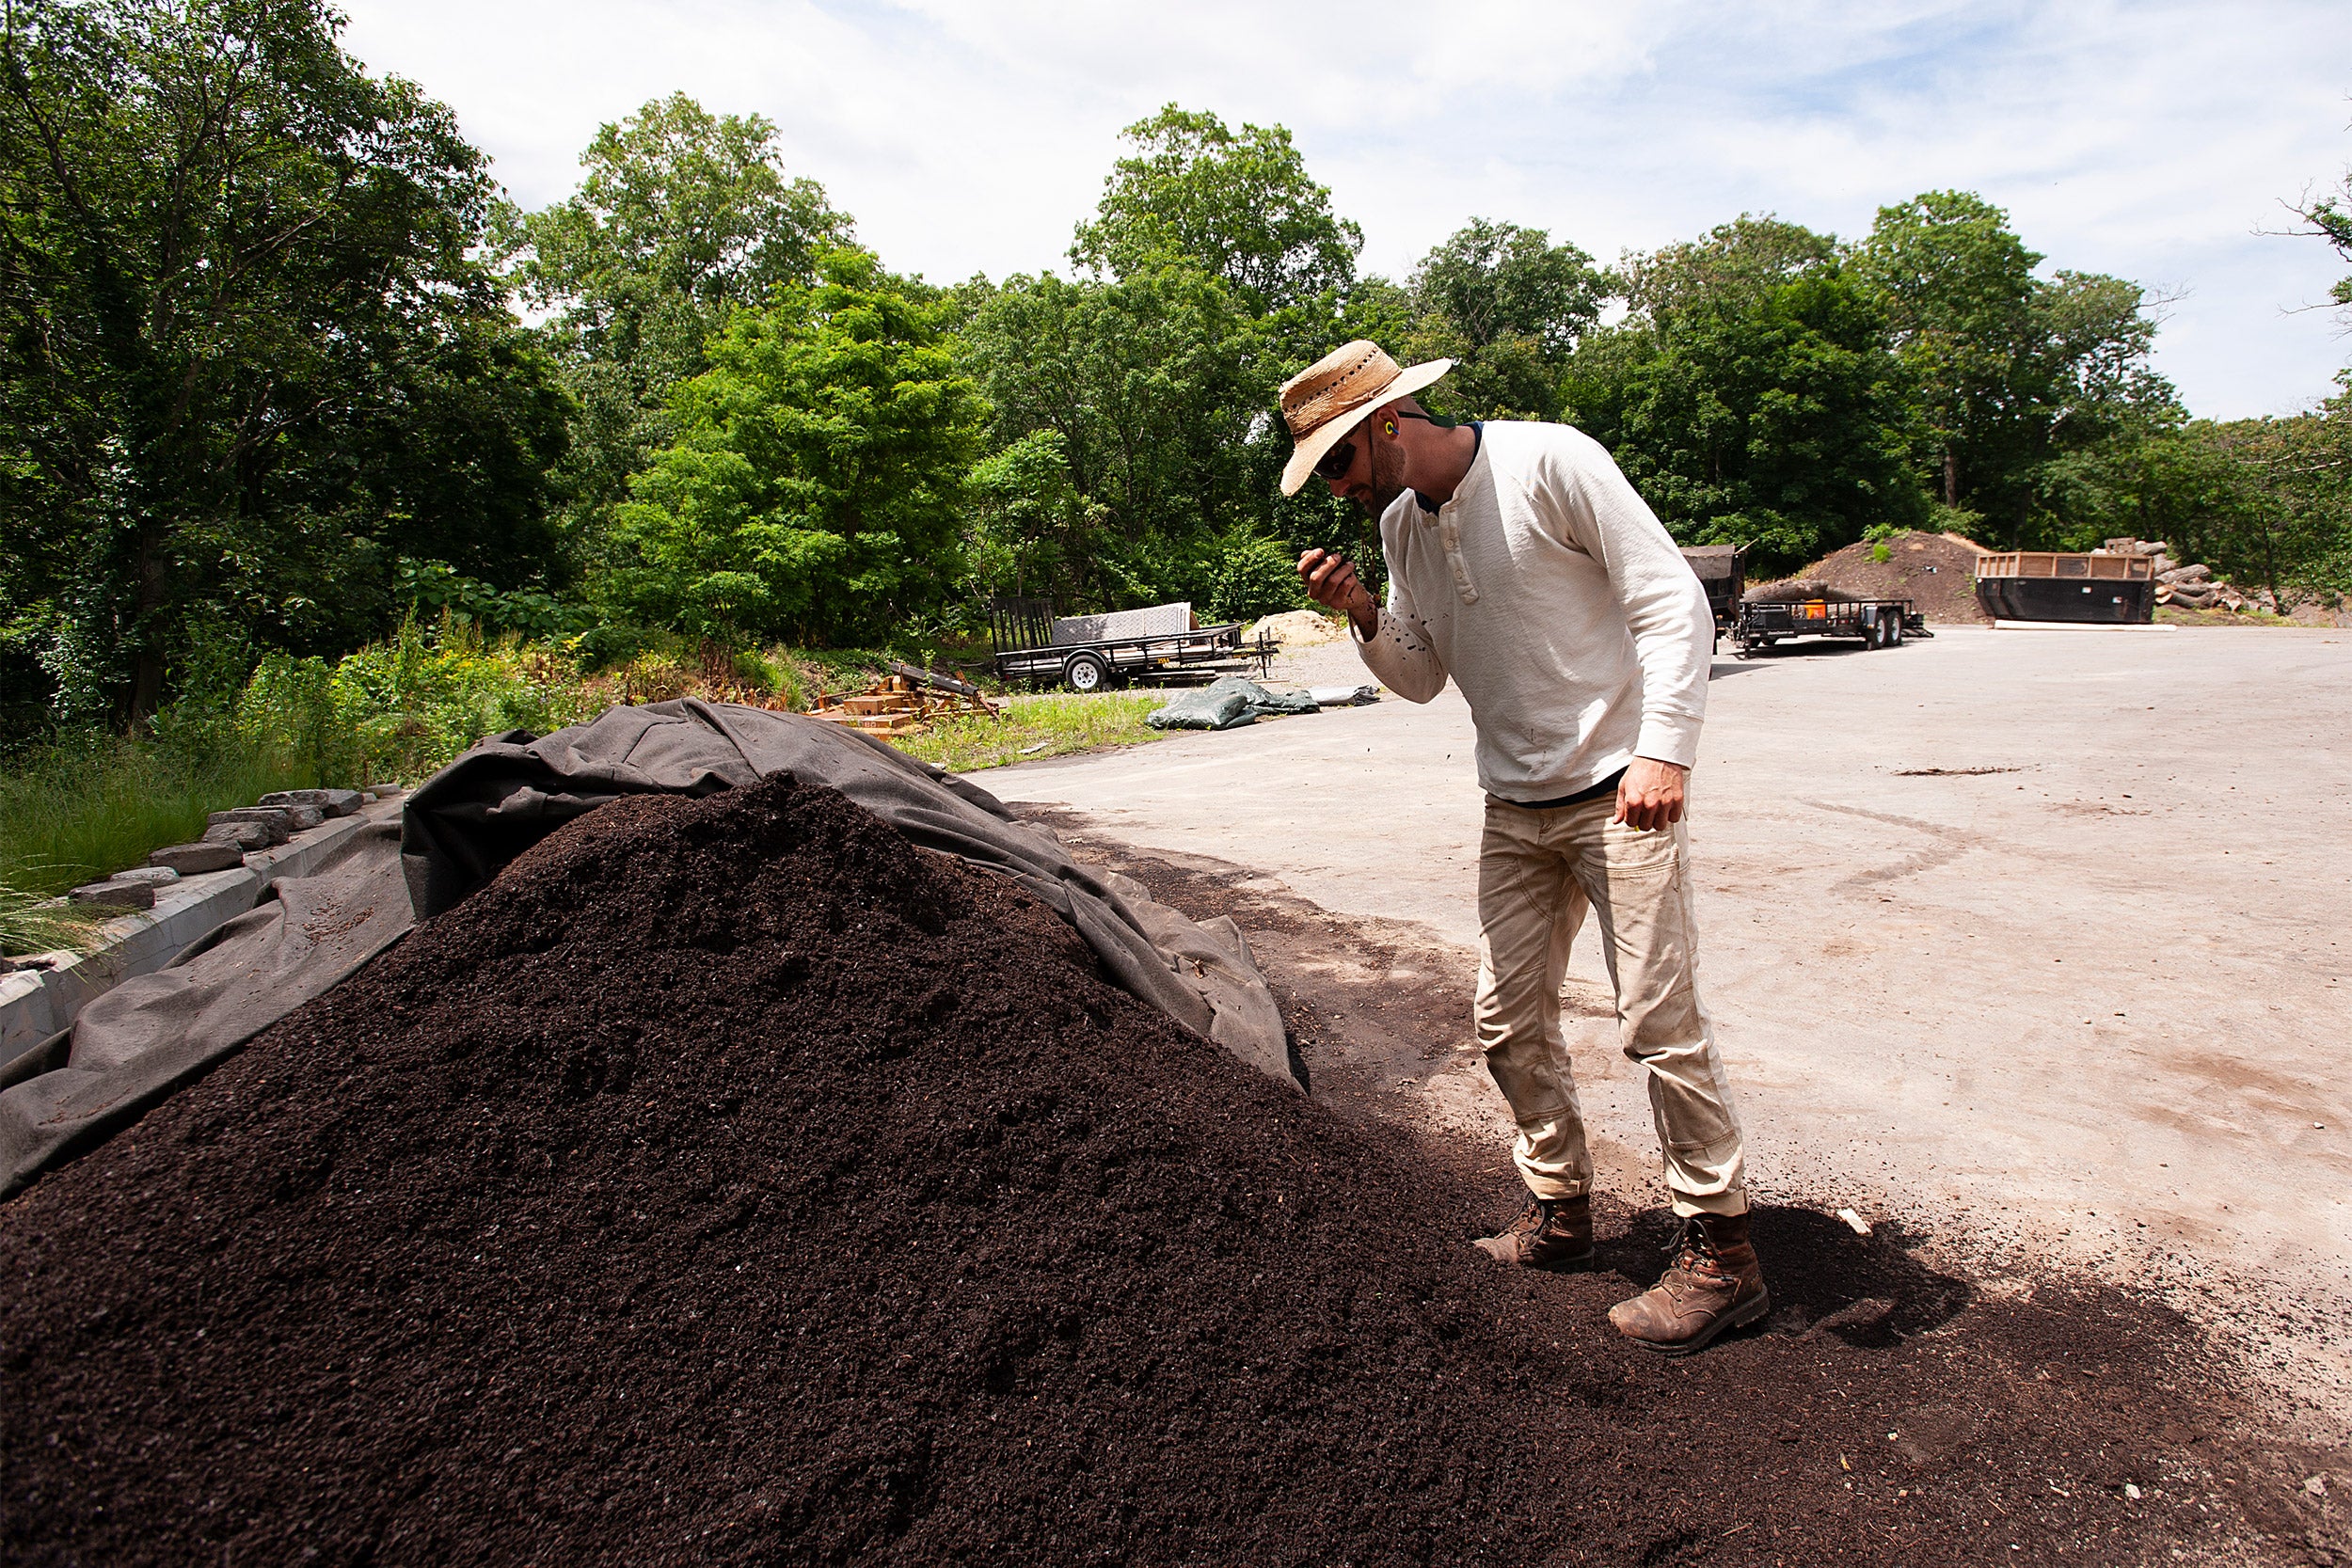 Man examines compost pile